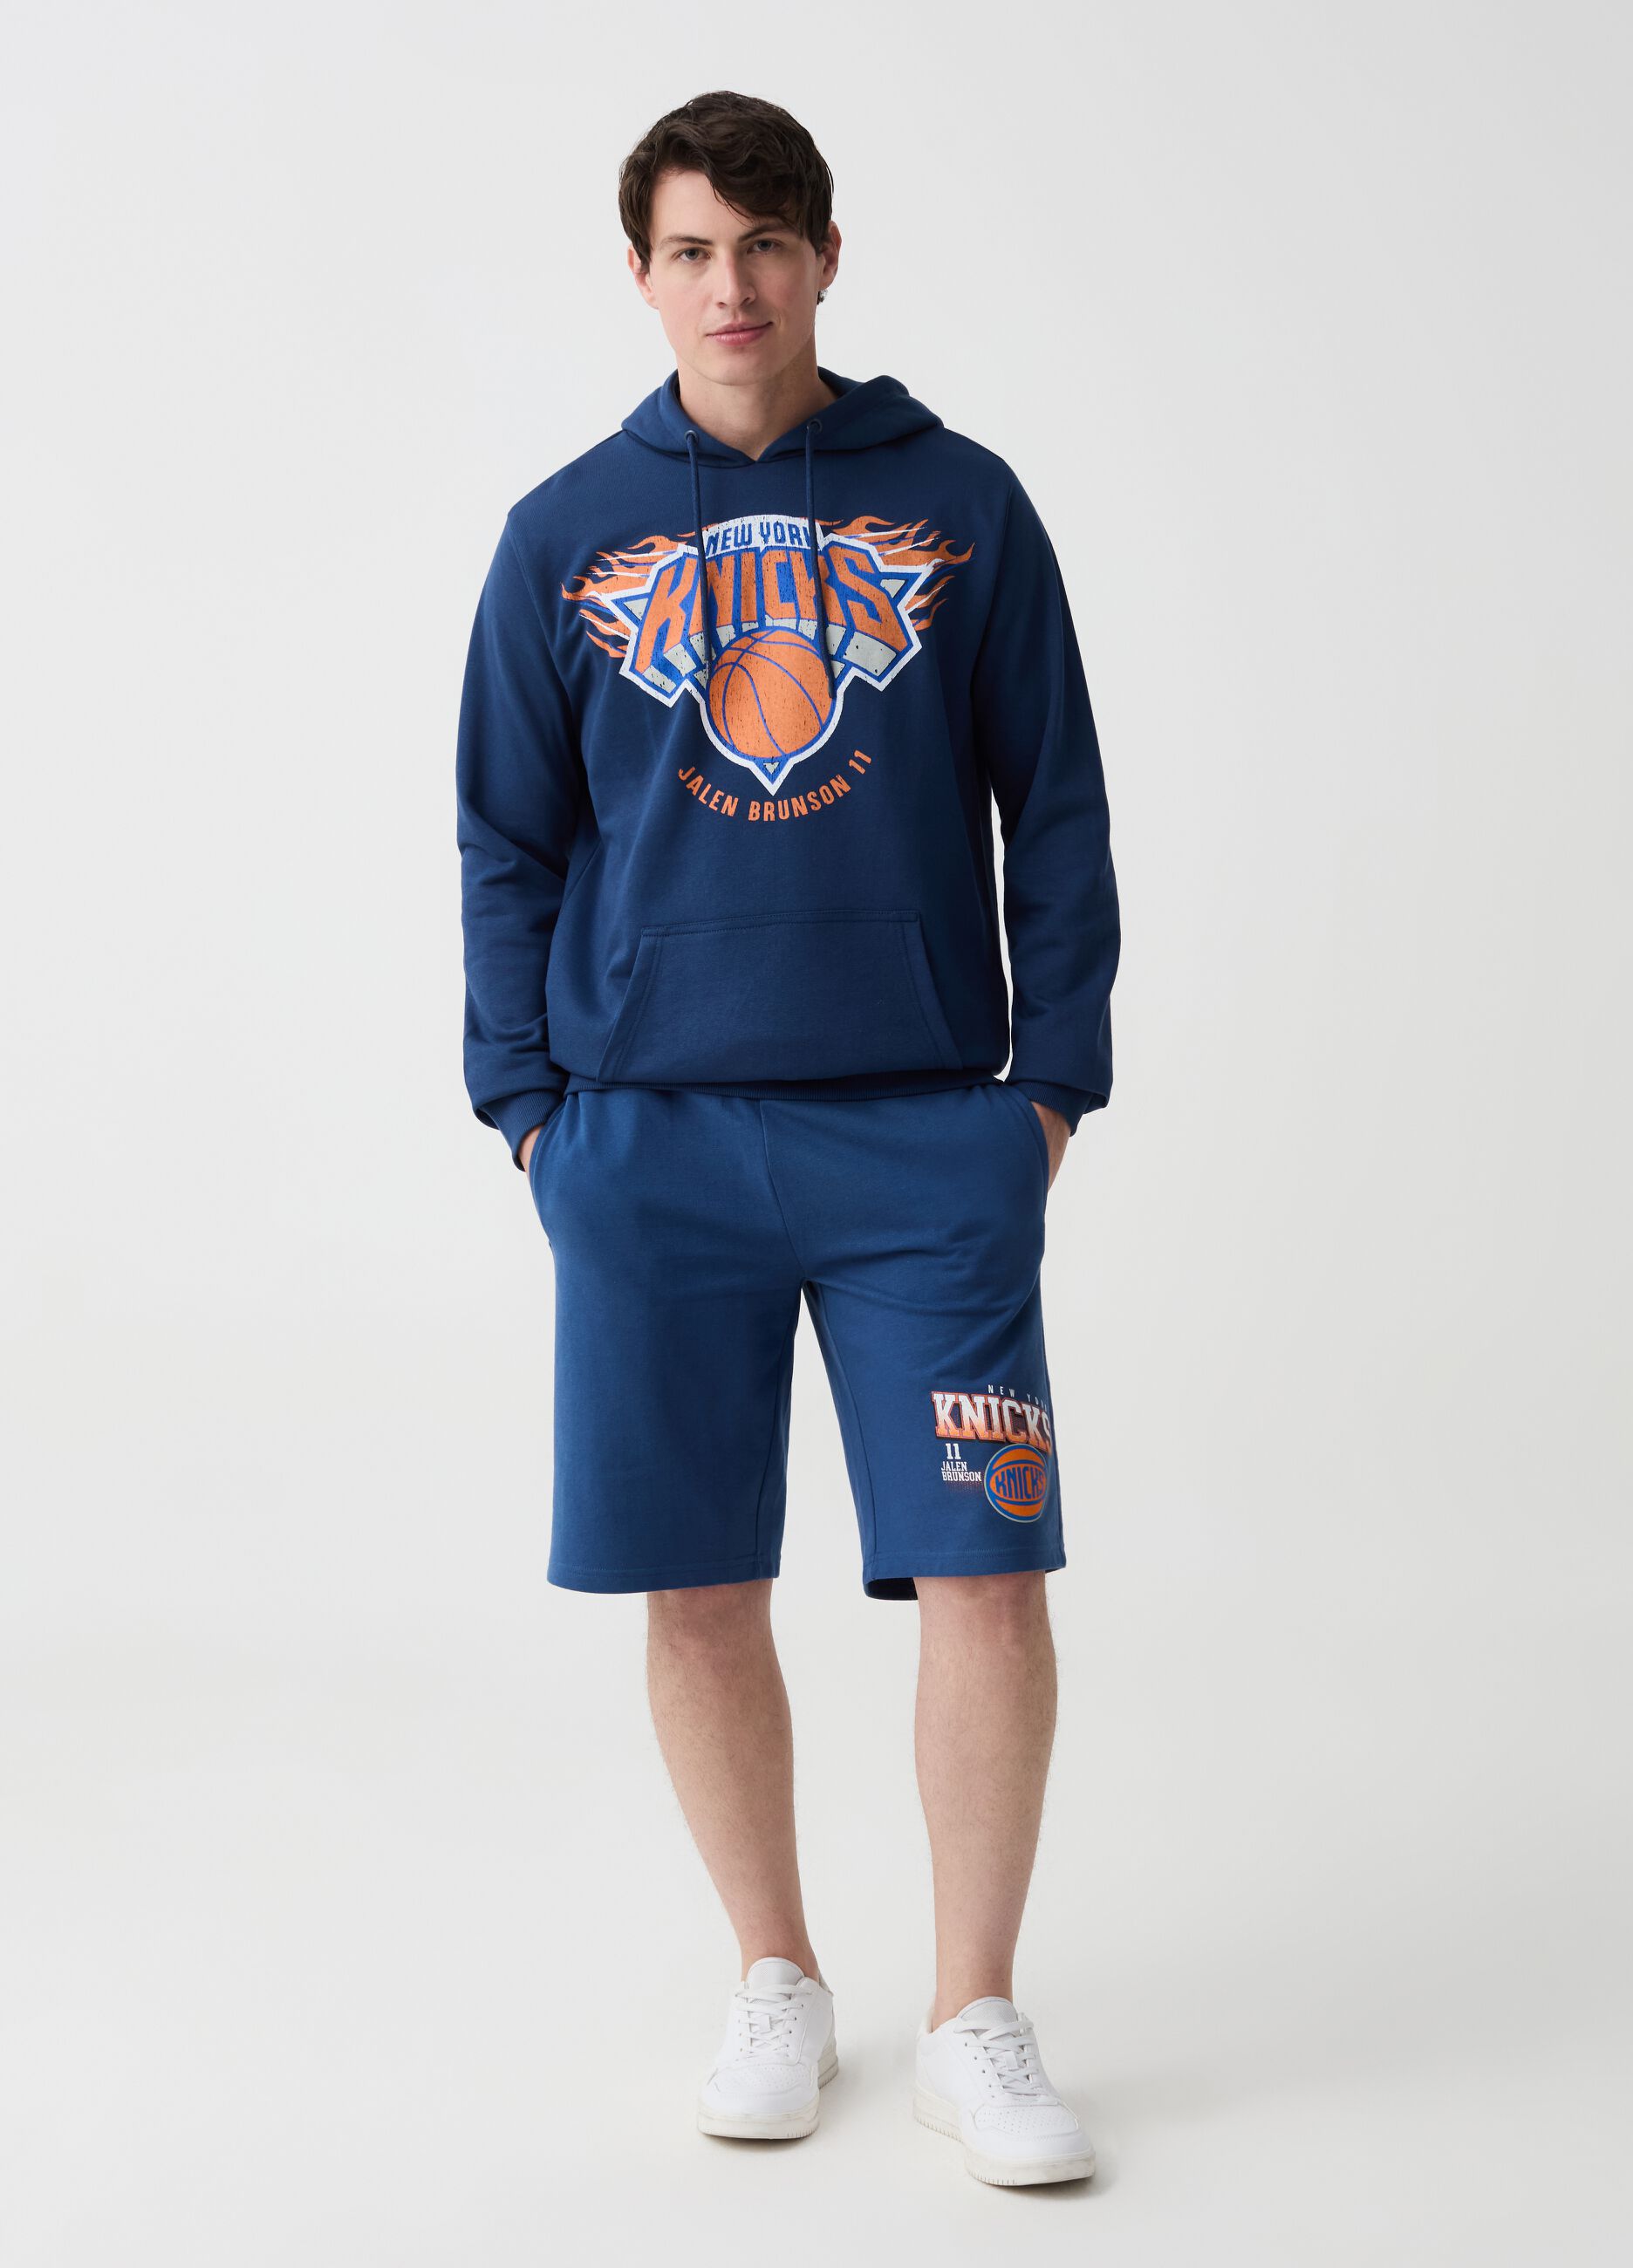 Fleece Bermuda shorts with NBA New York Knicks print